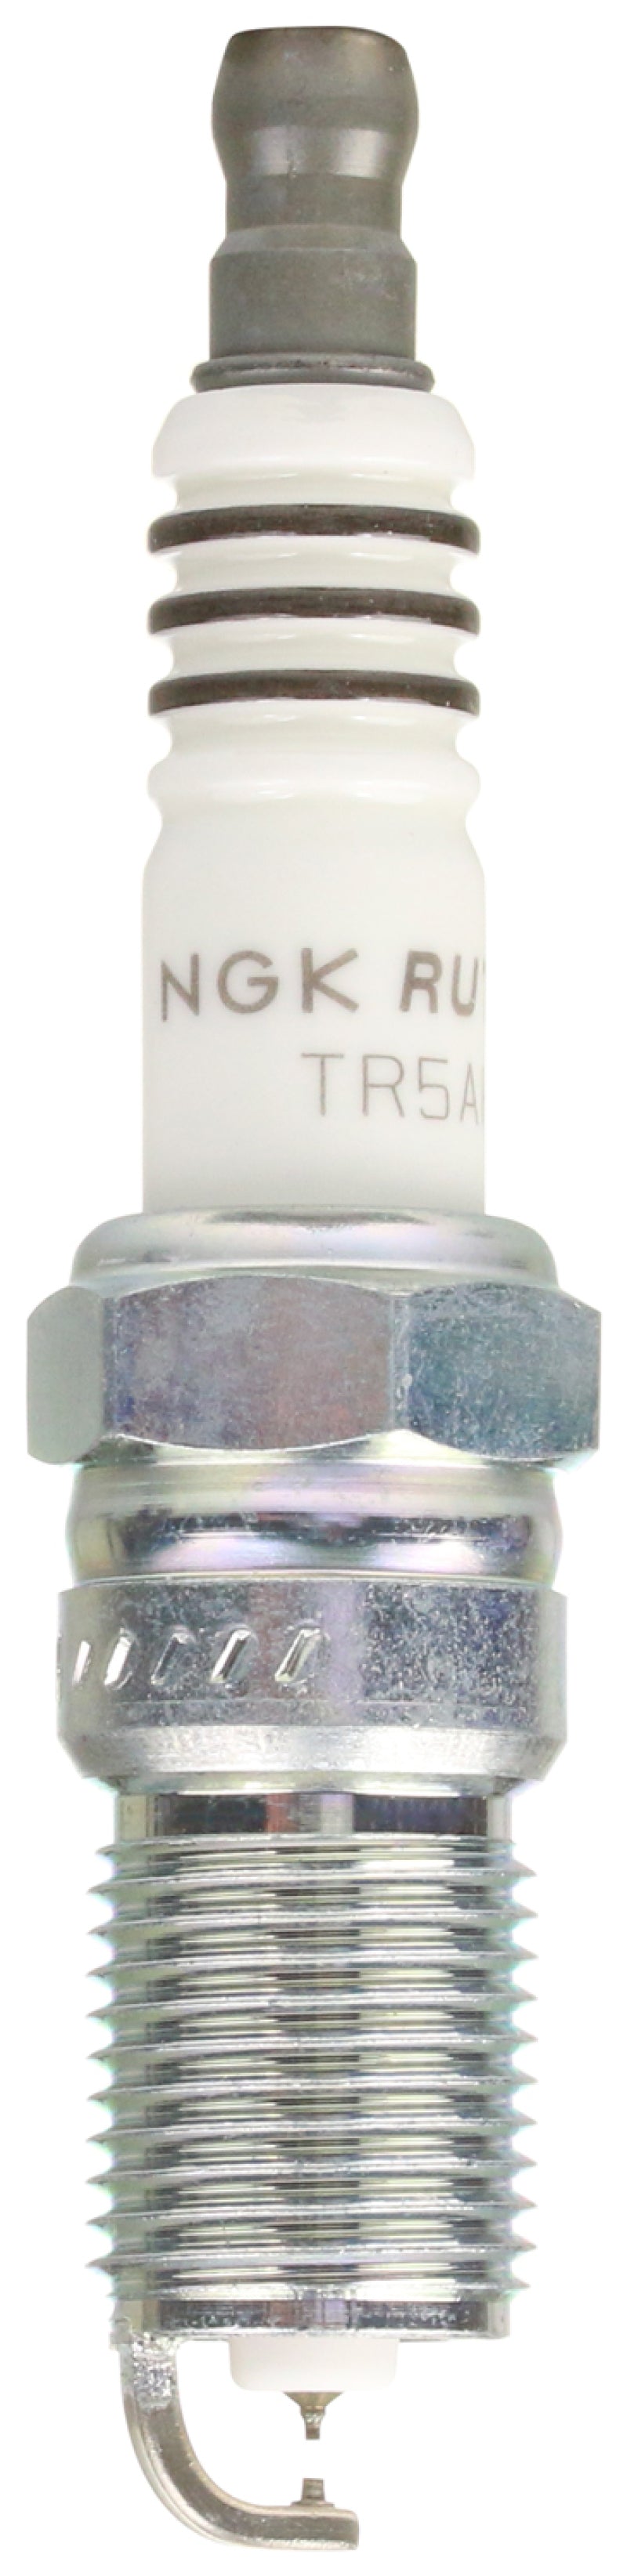 NGK Ruthenium HX Spark Plug Box of 4 (TR5AHX).